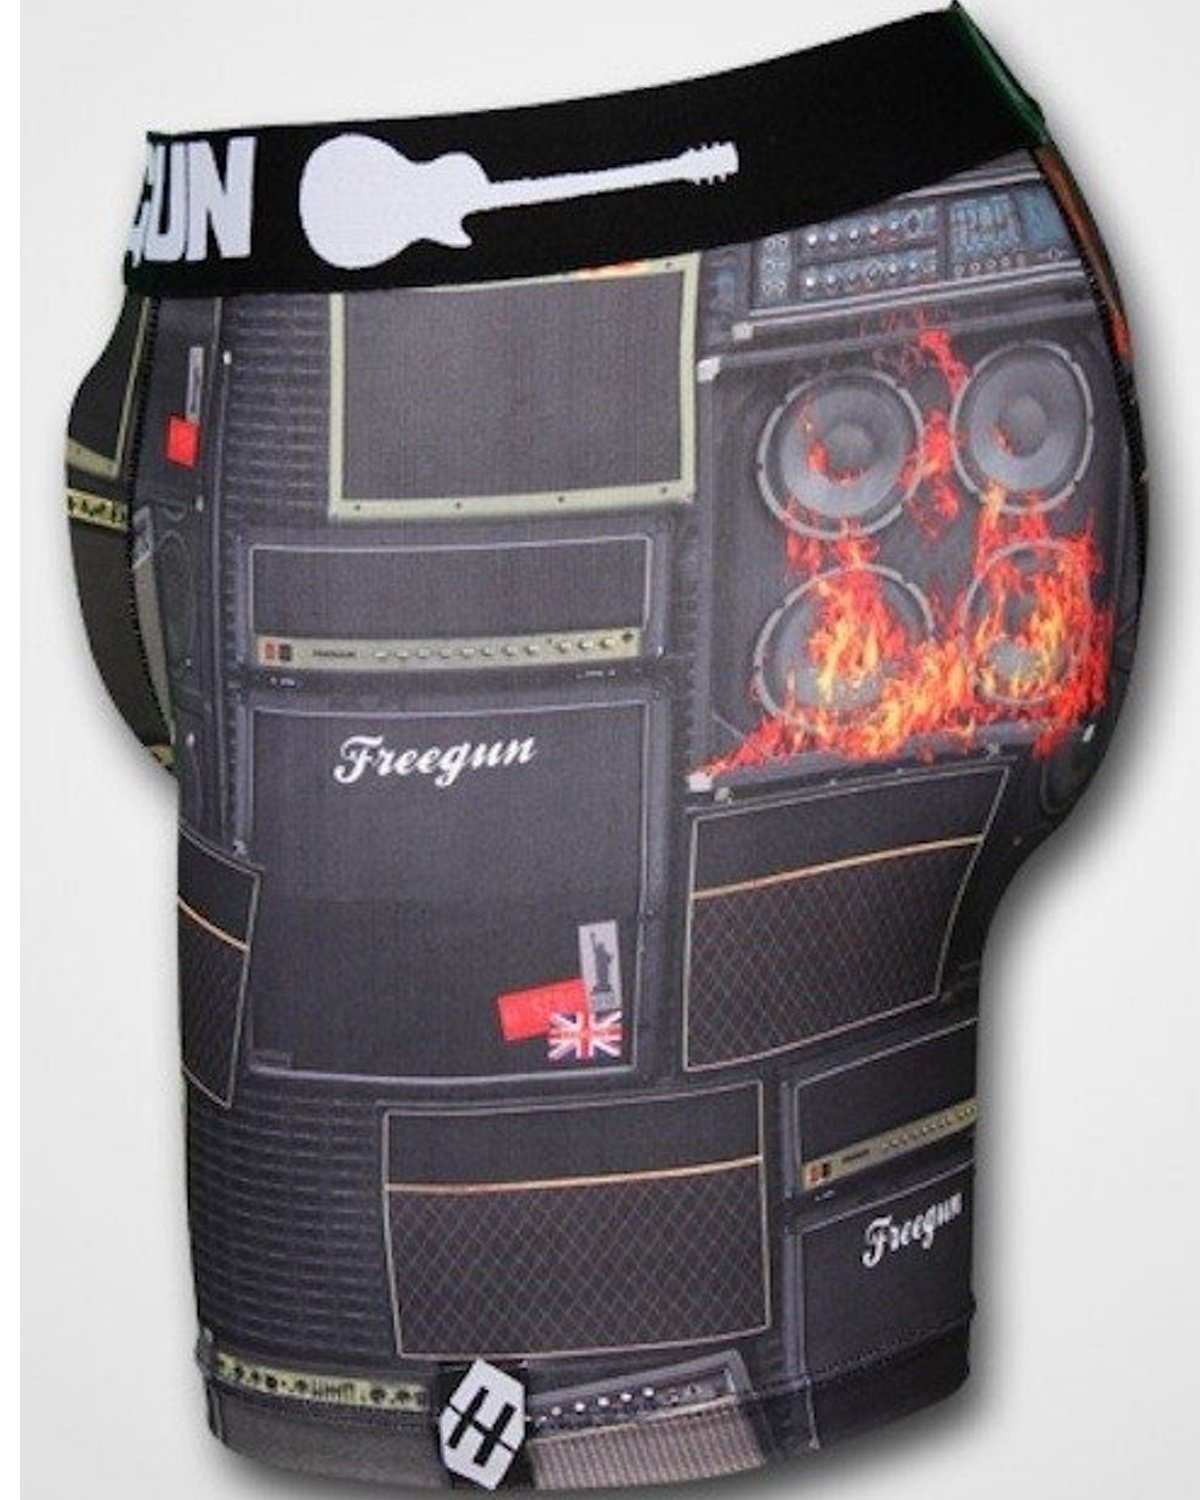 Boxer shorts Freegun Hyraw - Pirate - Underwear - Clothing - Men